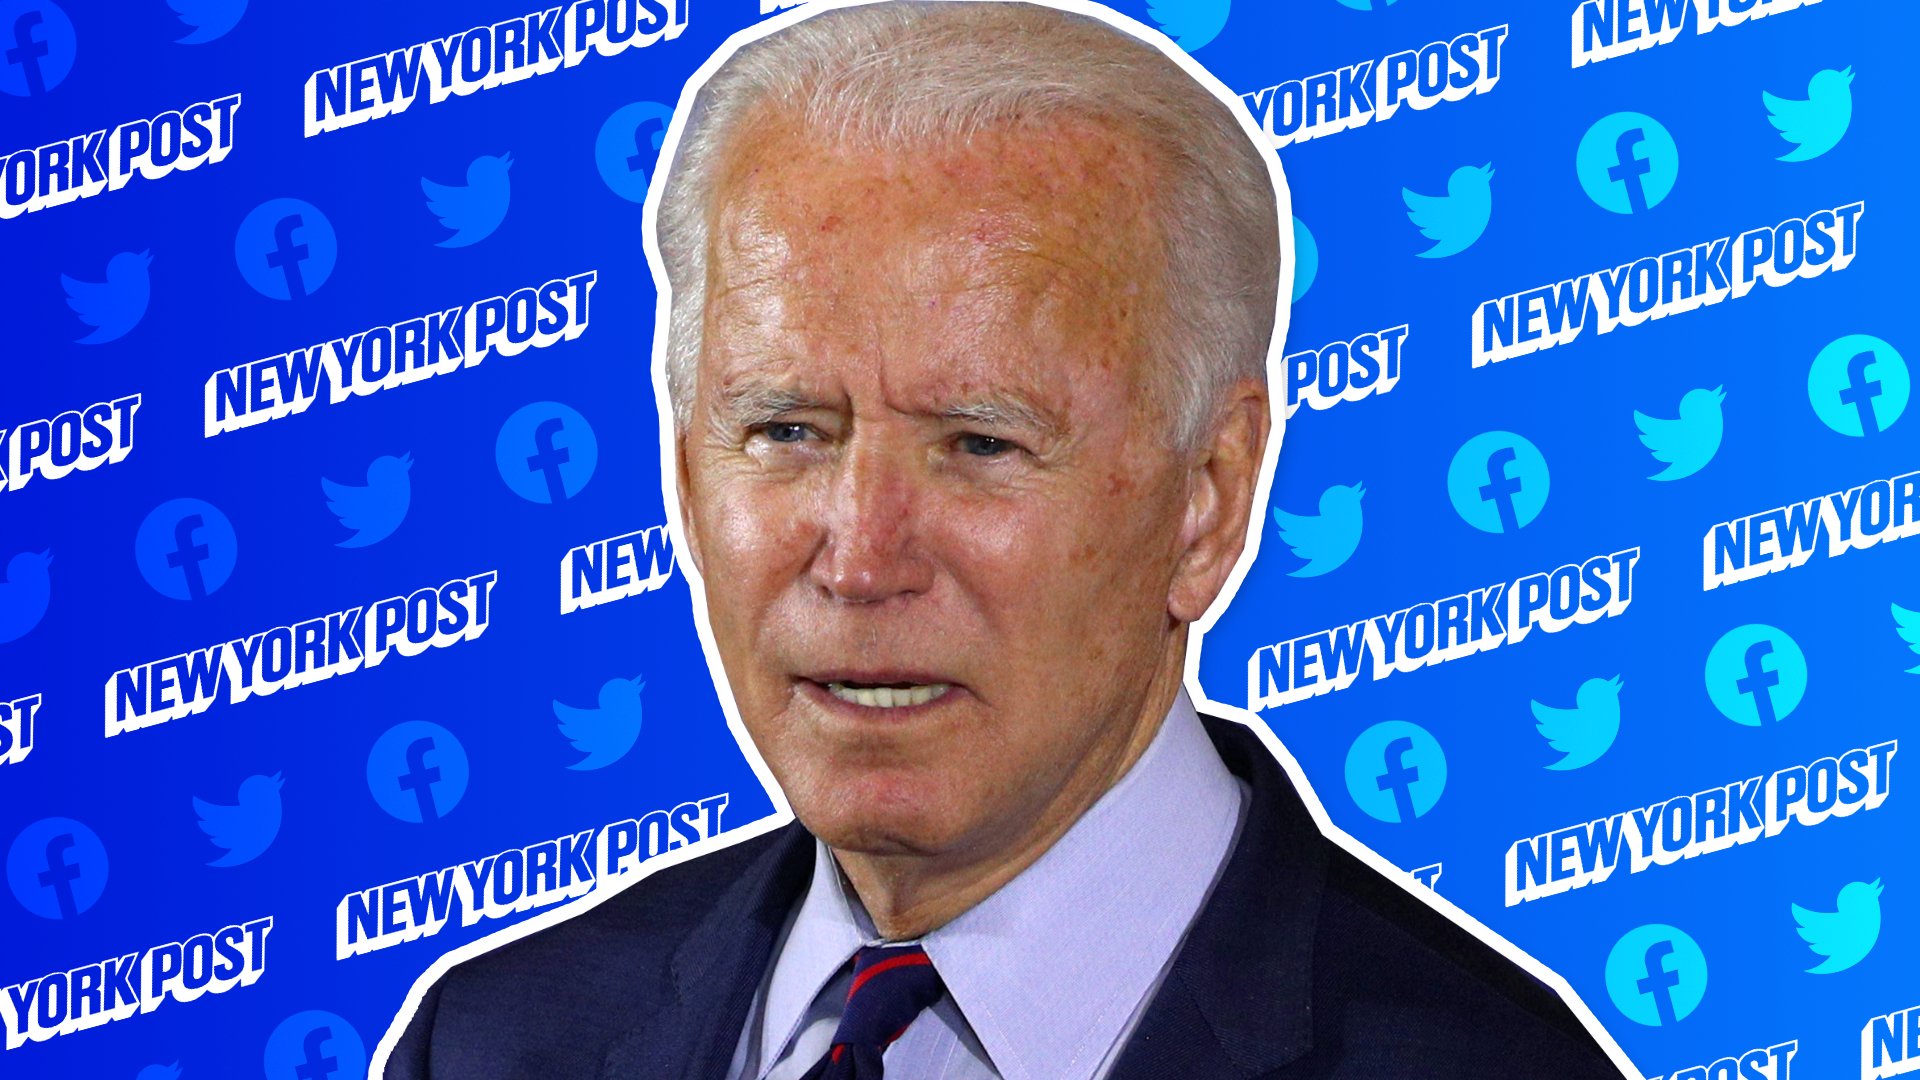 Twitter and Facebook's action over Joe Biden article reignites bias